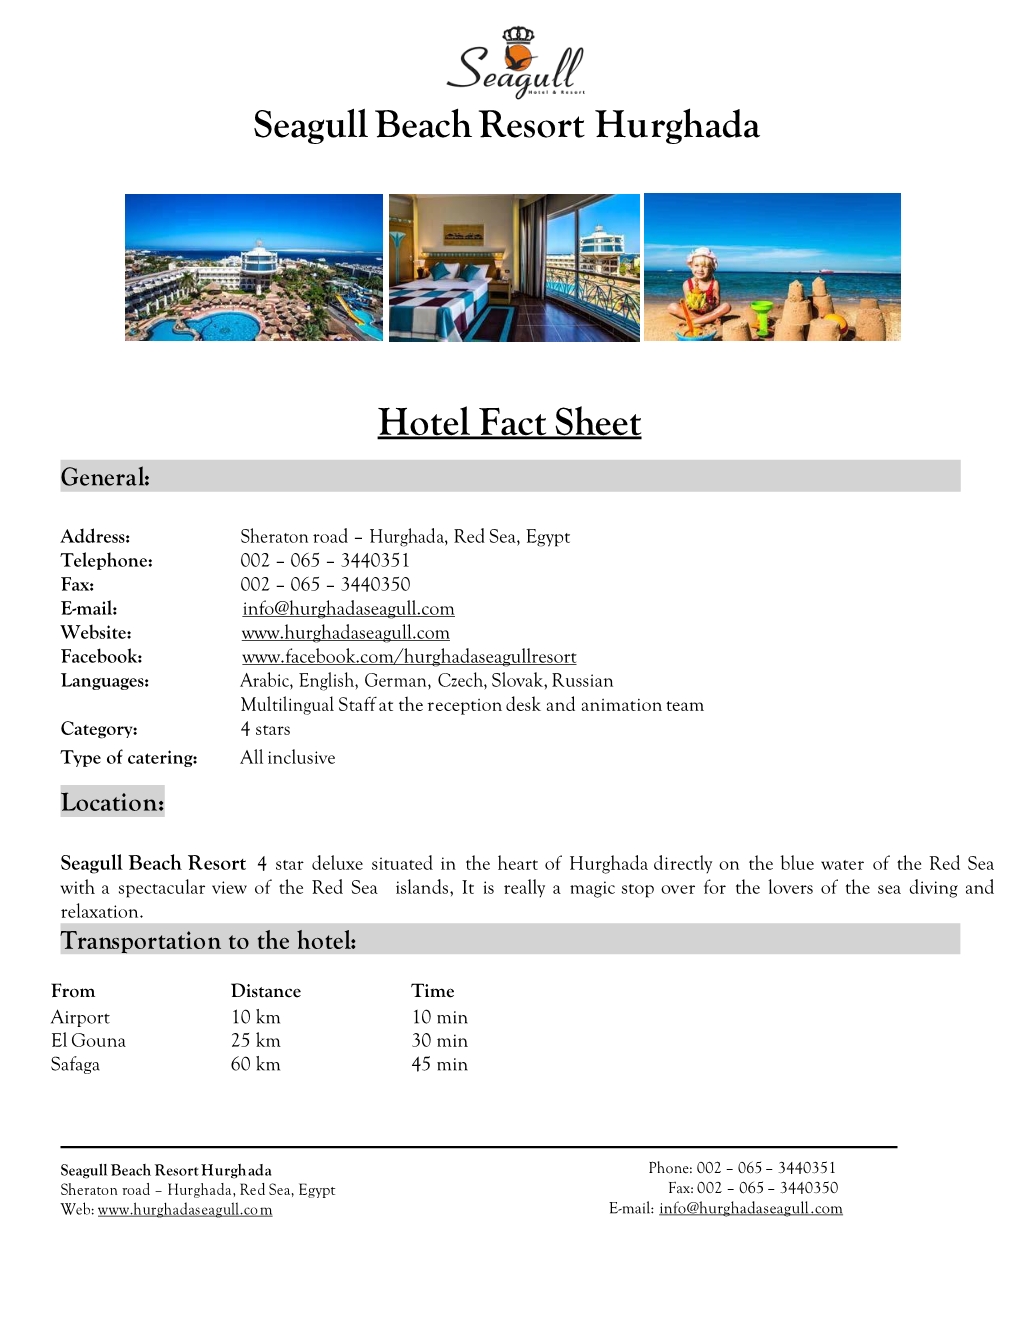 Seagull Beach Resort Hurghada Hotel Fact Sheet